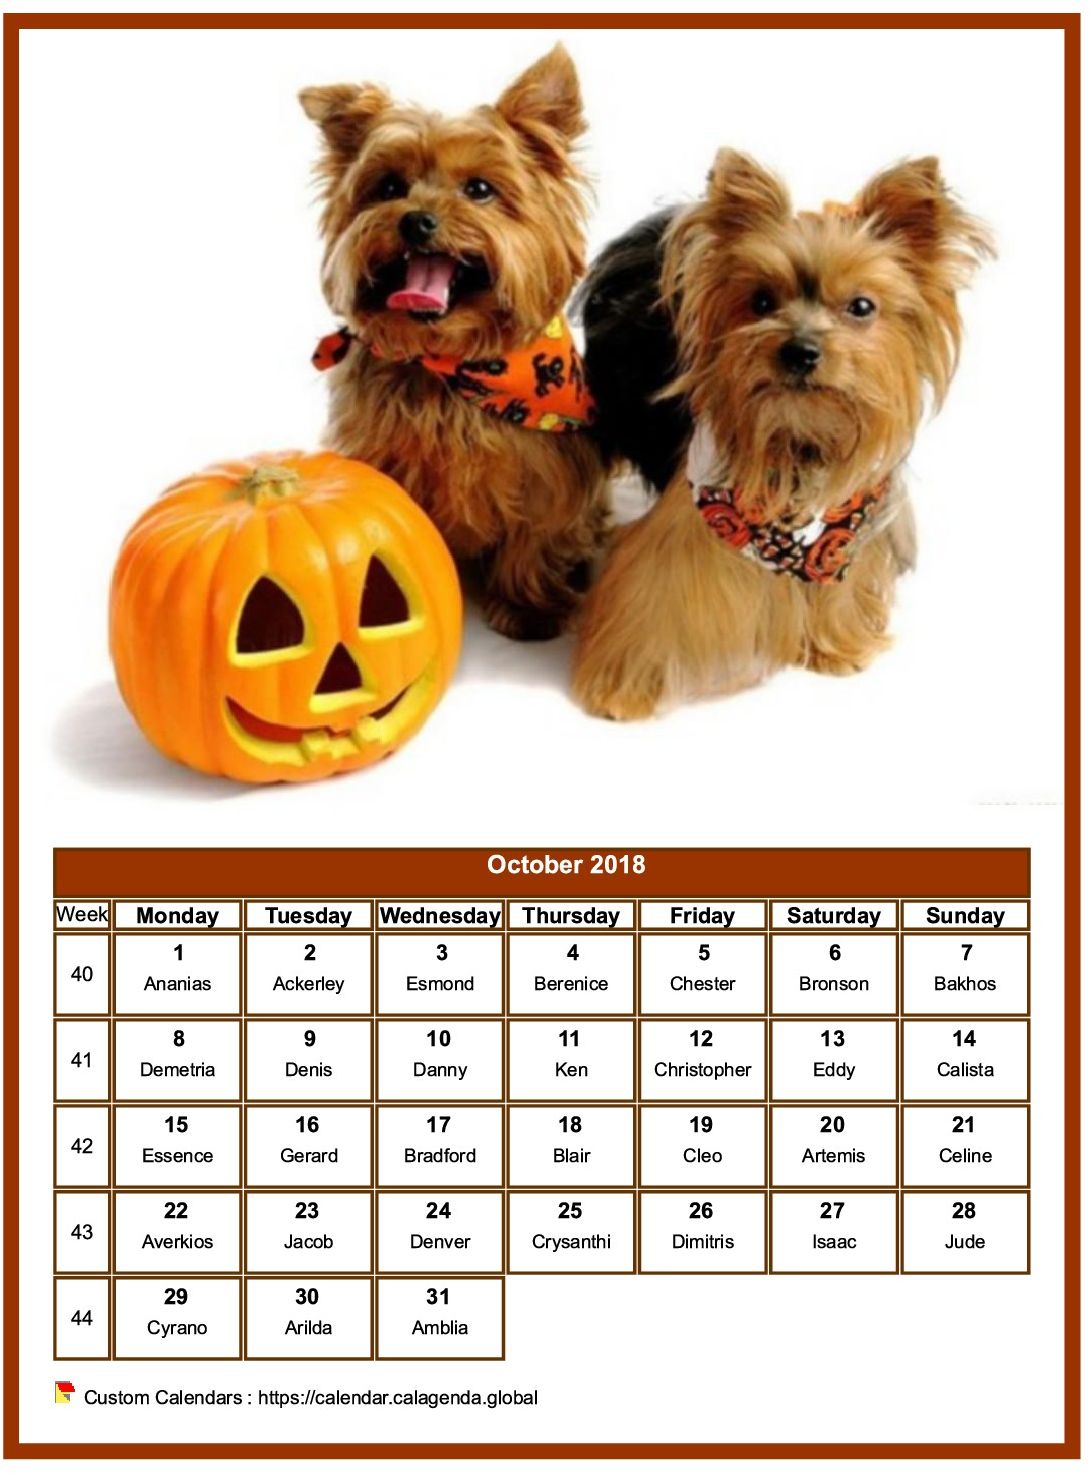 Calendar October 2018 dogs